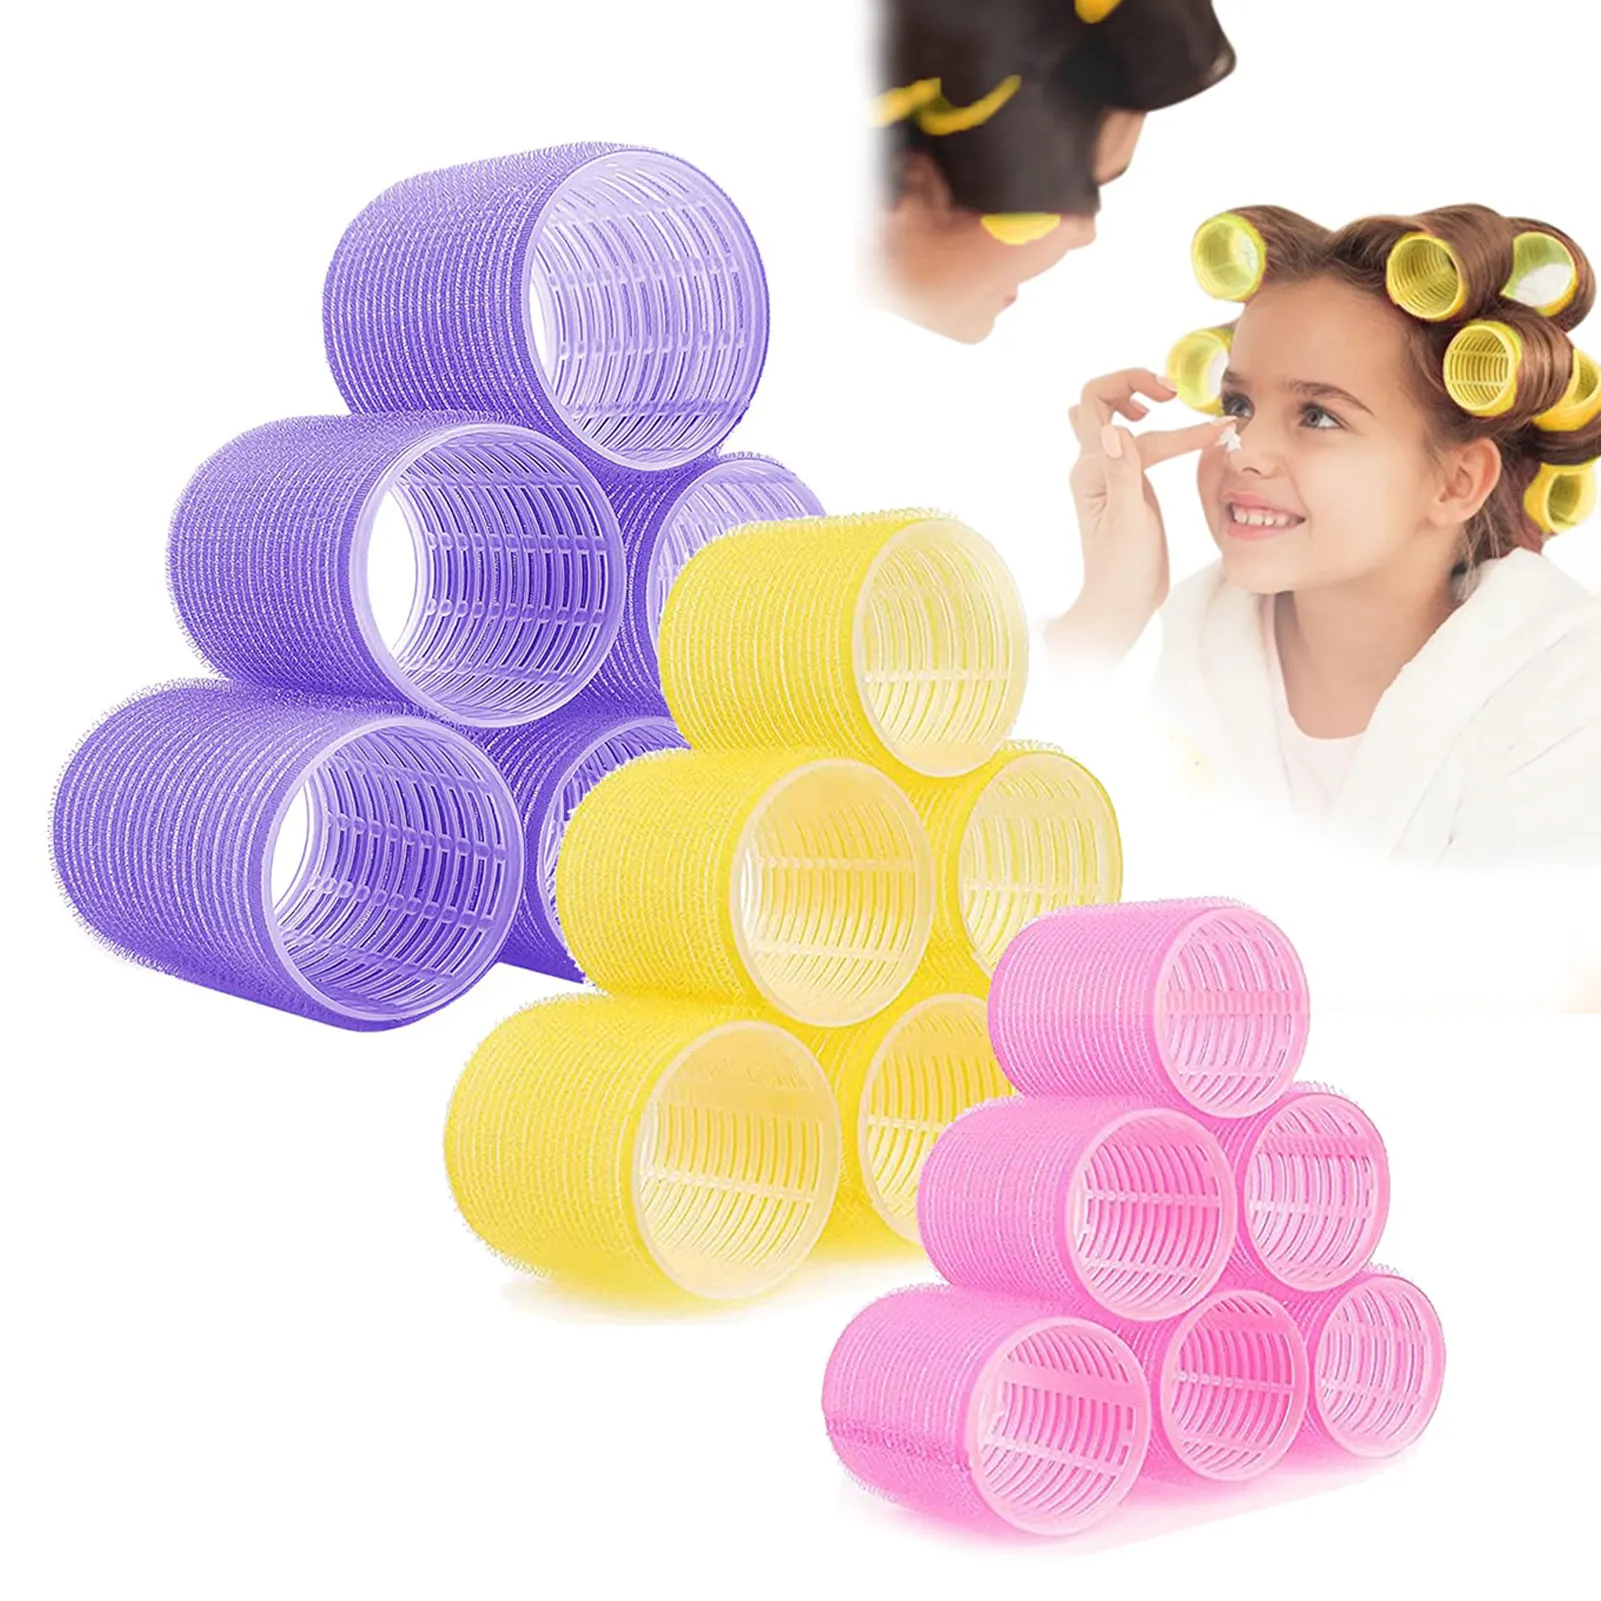 Hairdressing sleep hair styling tools Create Volume magnetic plastic hair rollers with curlers elastic hair rollers